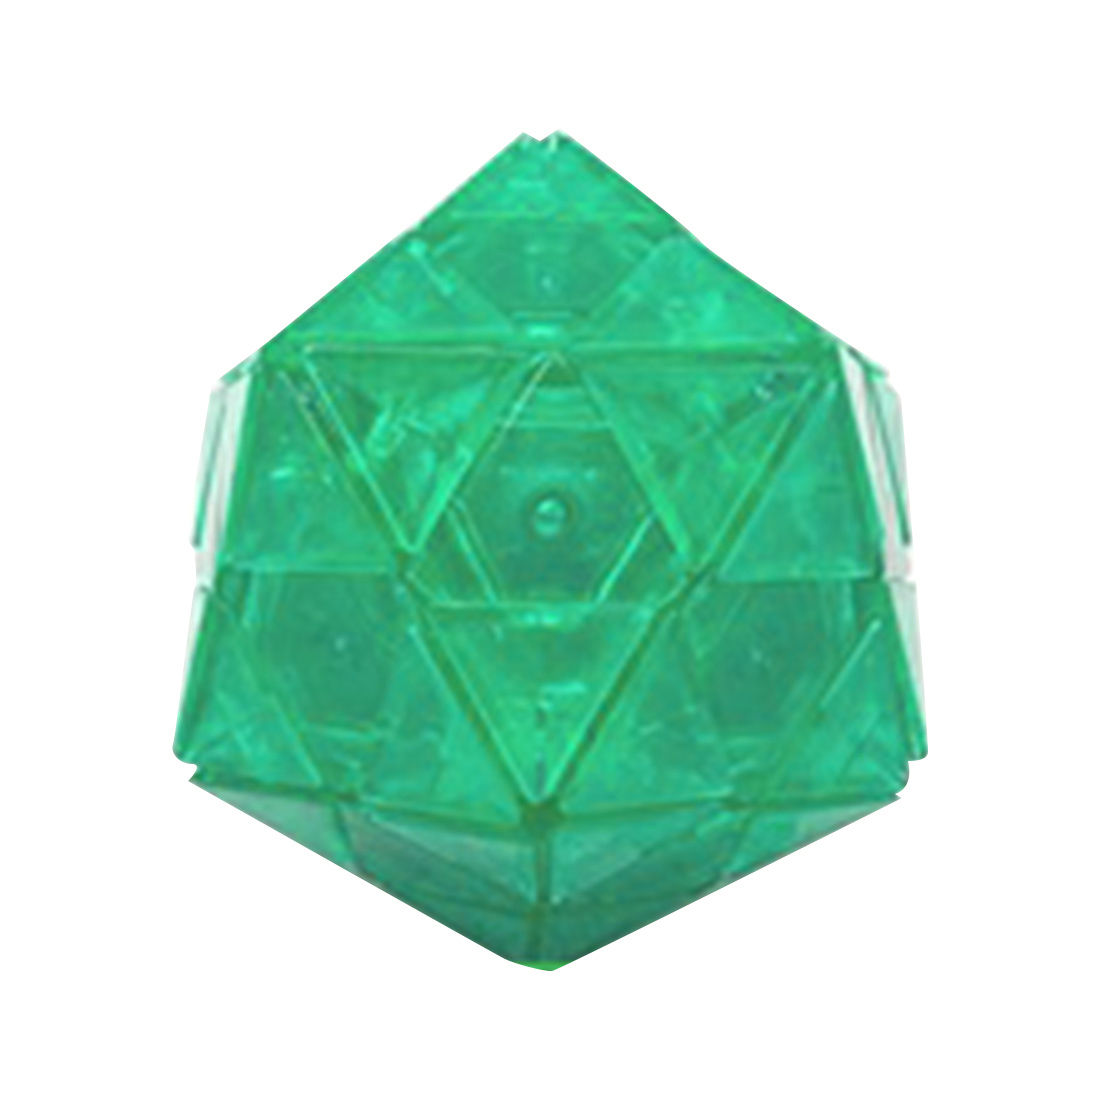 Calvin's Icosahedron Carousel Magic Cube (Ice Green/Limited Edition)